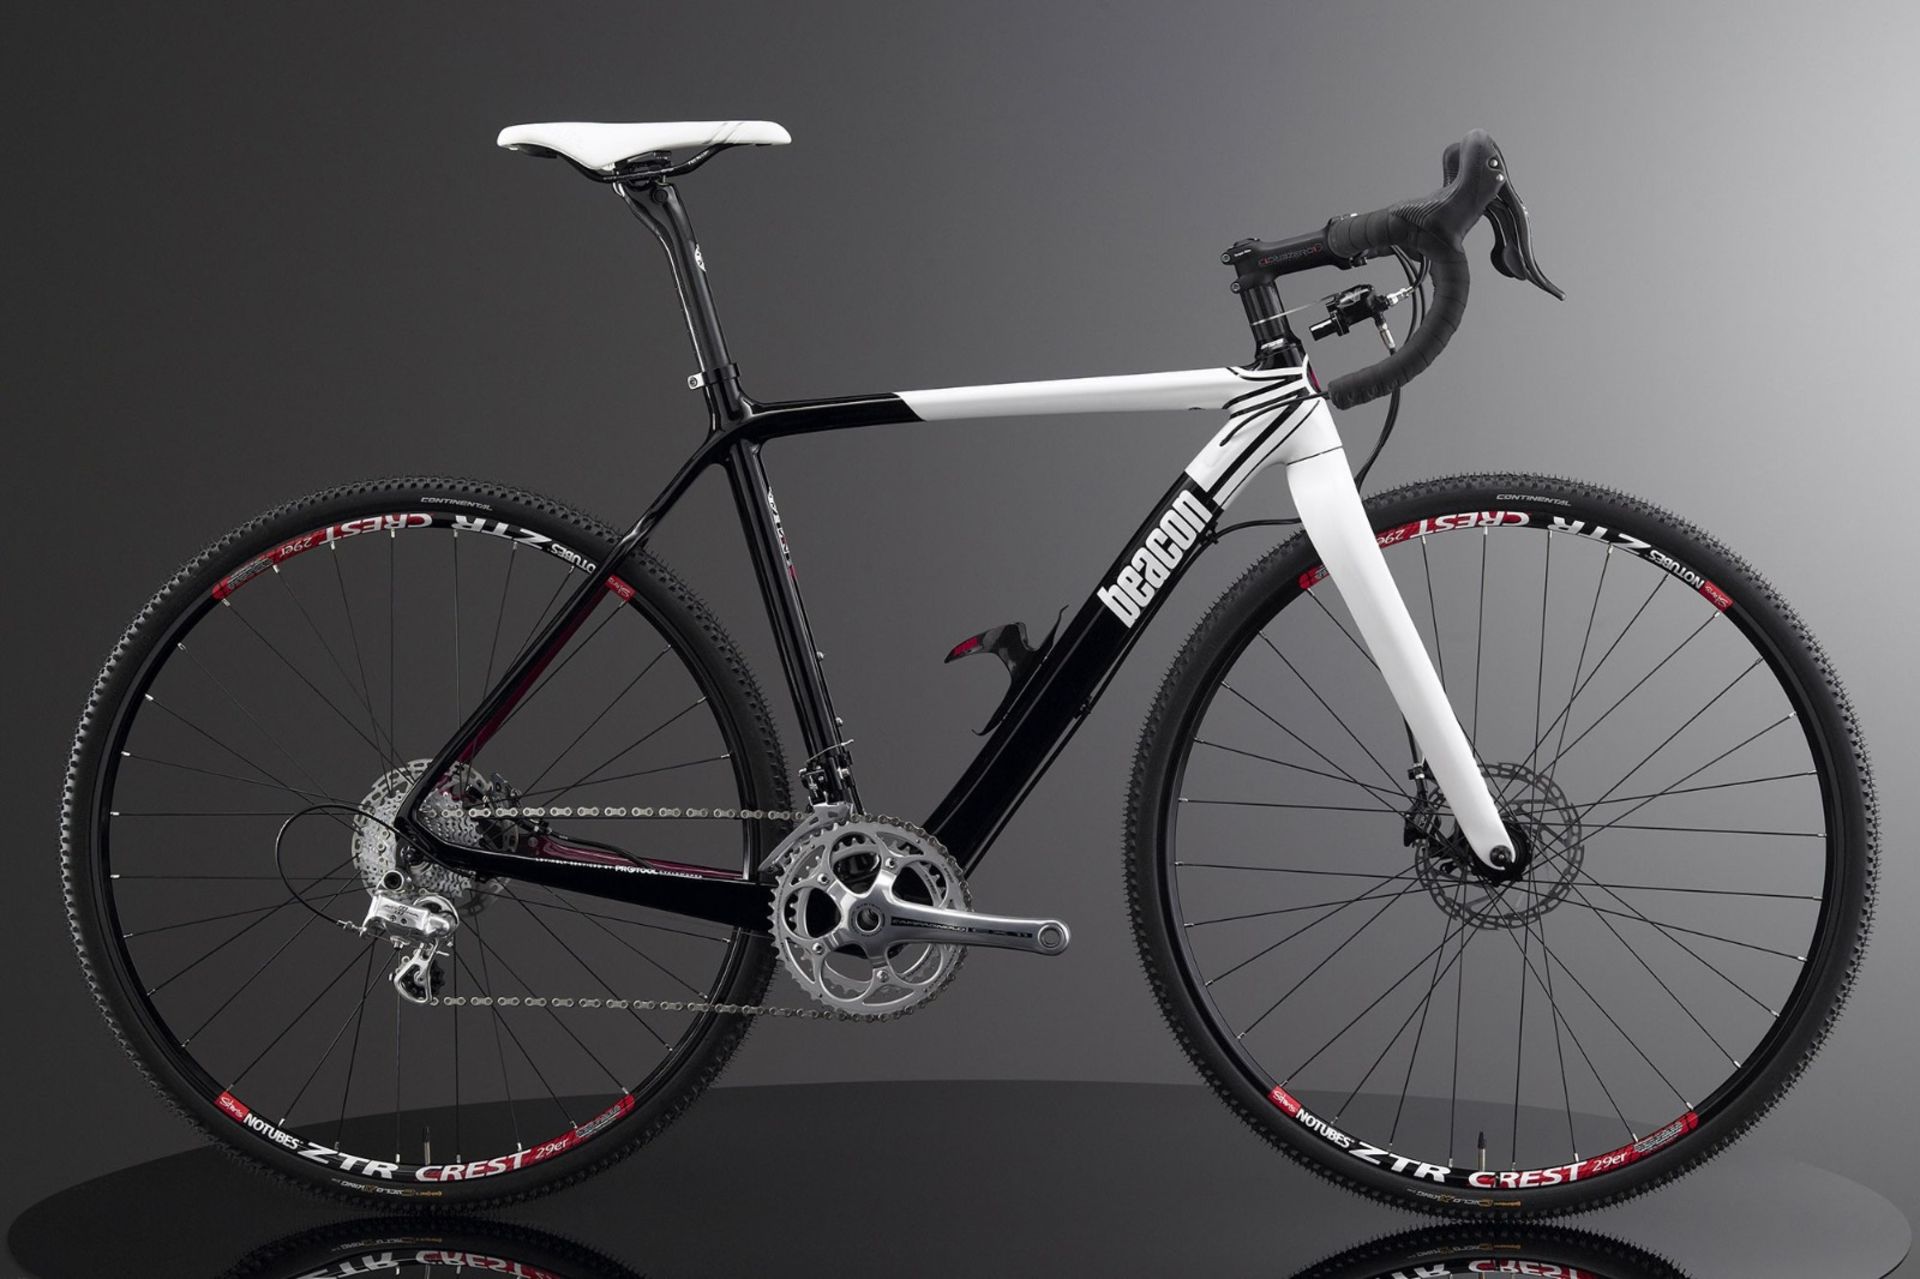 1 x Beacon Model BF-45, Size 560, Carbon Fibre Bike Frame in Black & White. - Image 2 of 3